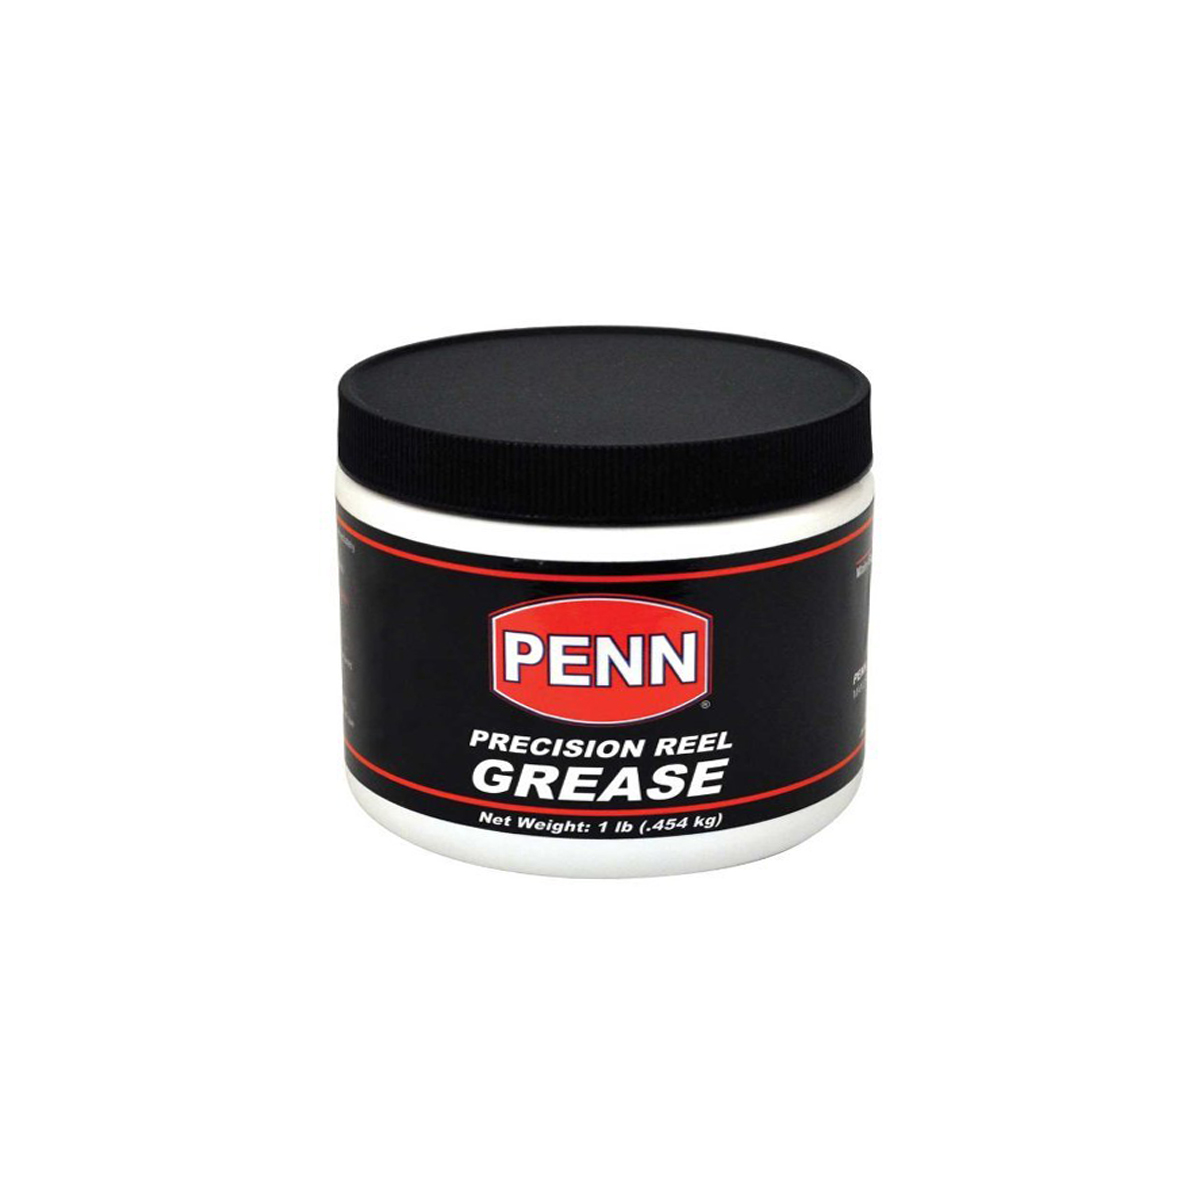 Penn Precision Reel Grease #Grease 1lb. - 7 SEAS PROSHOP (THAILAND)